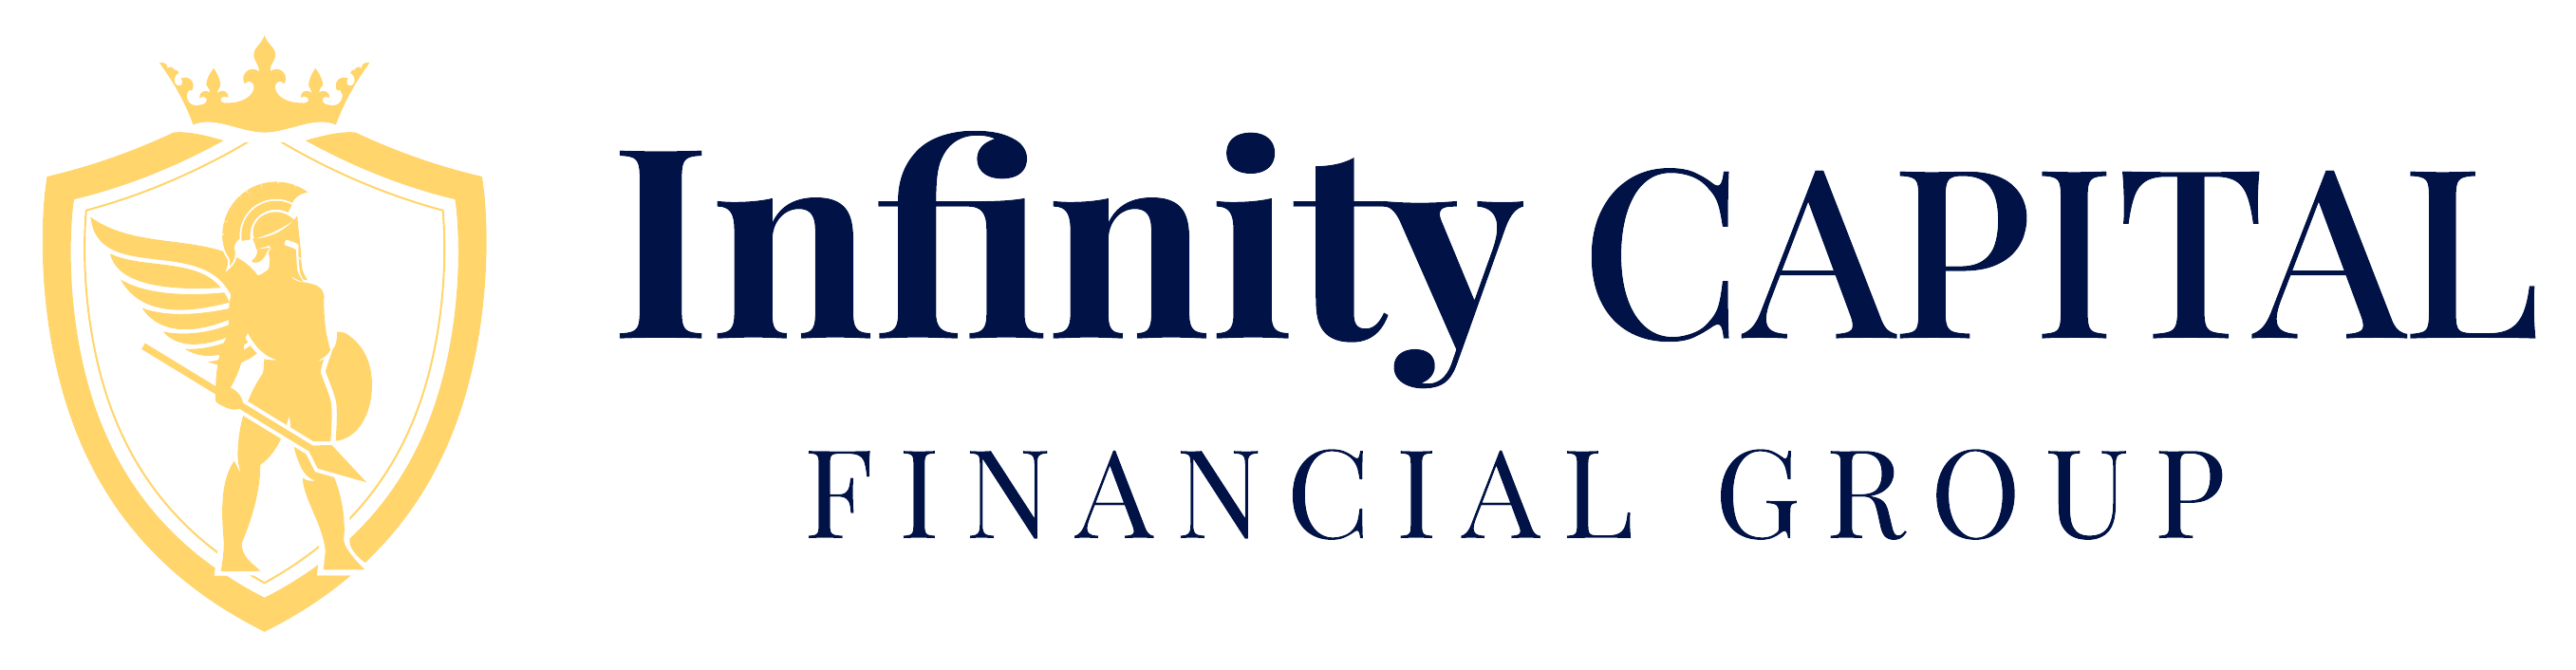 Infinity Capital Financial Group